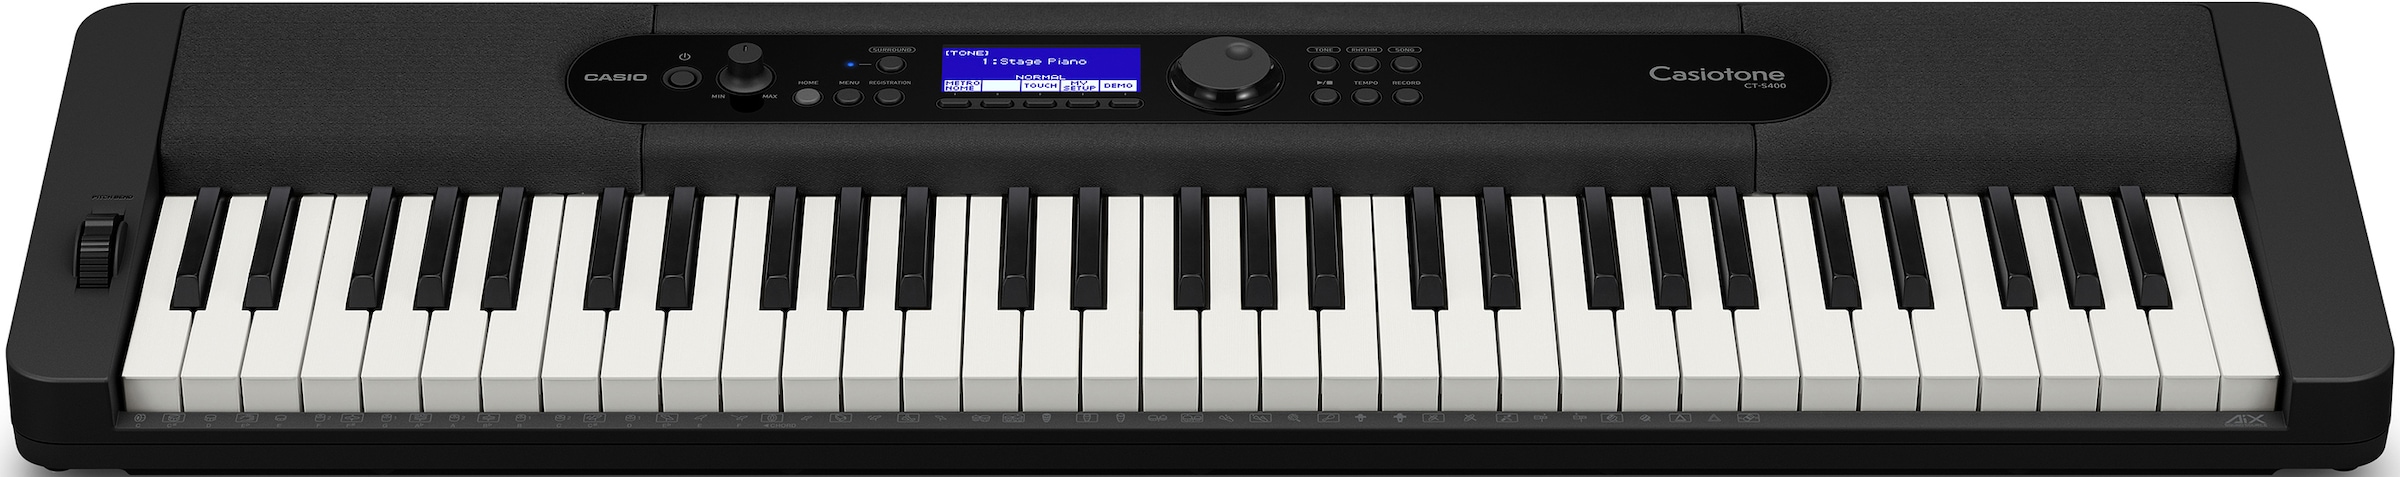 CASIO Home-Keyboard »Standardkeyboard CT-S400«, inkl. Netzteil